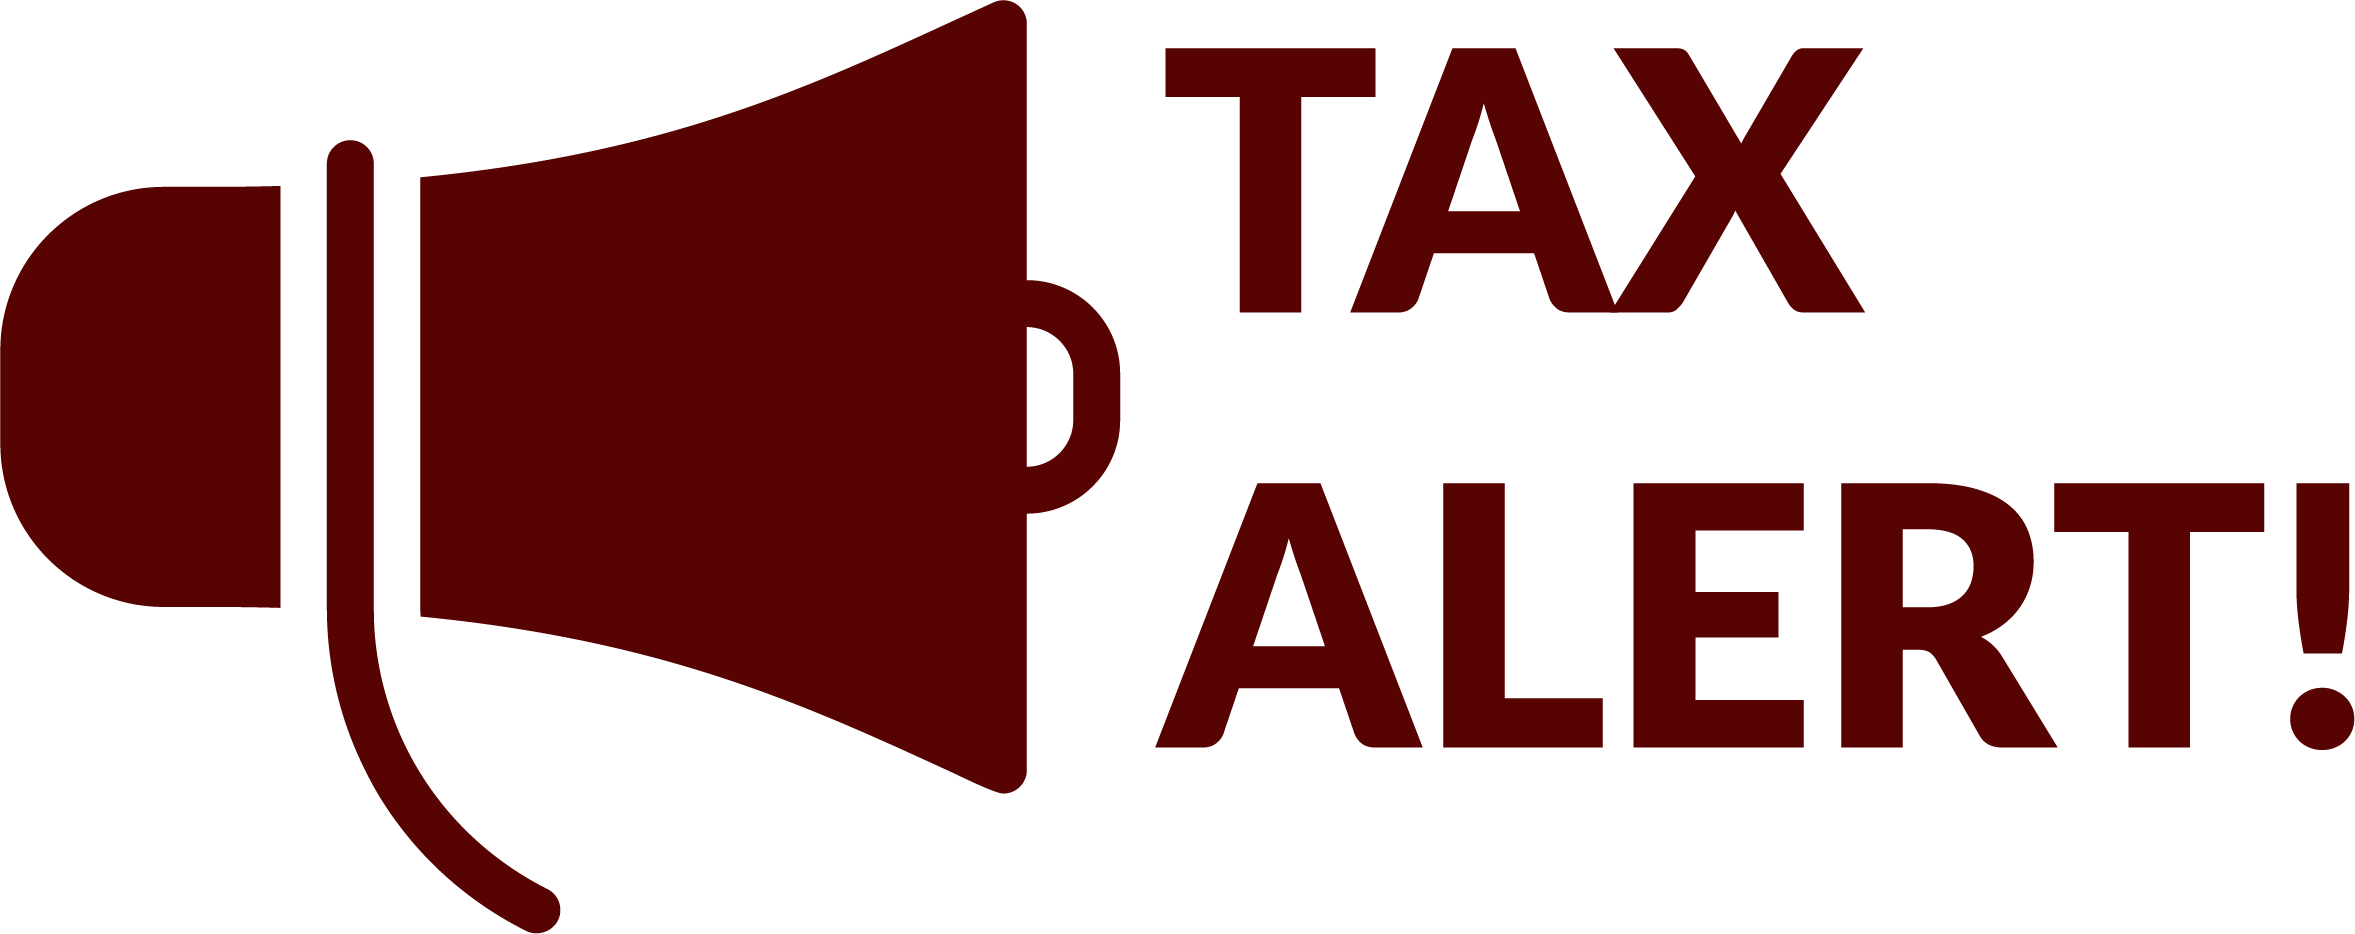 Png Irc Tax Rebate